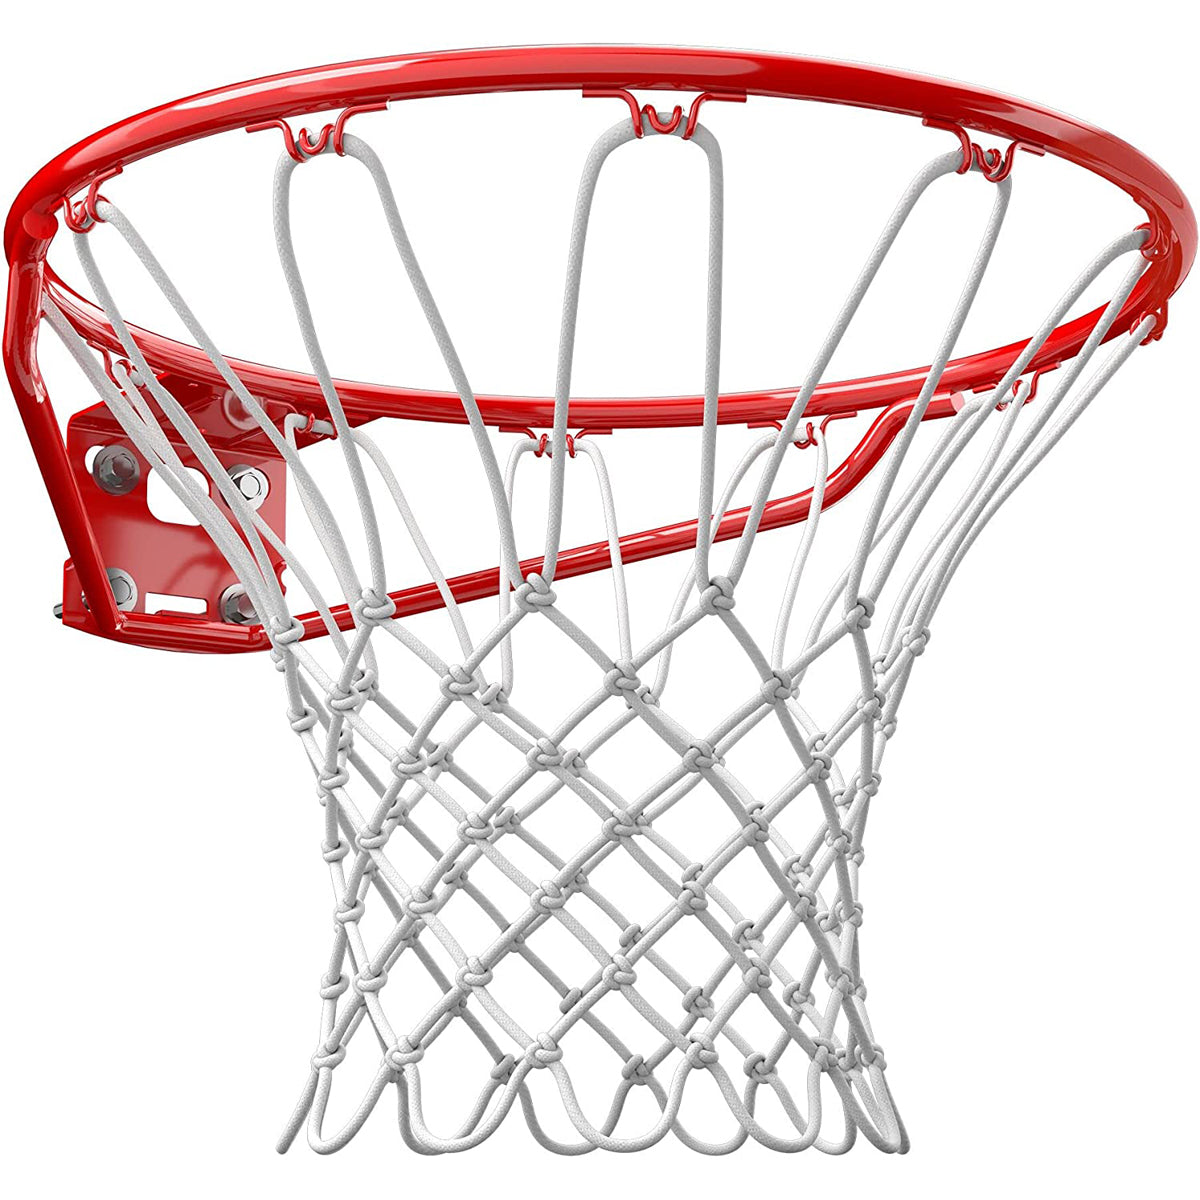 Spalding Standard Indoor/Outdoor Basketball Rim - Red Spalding